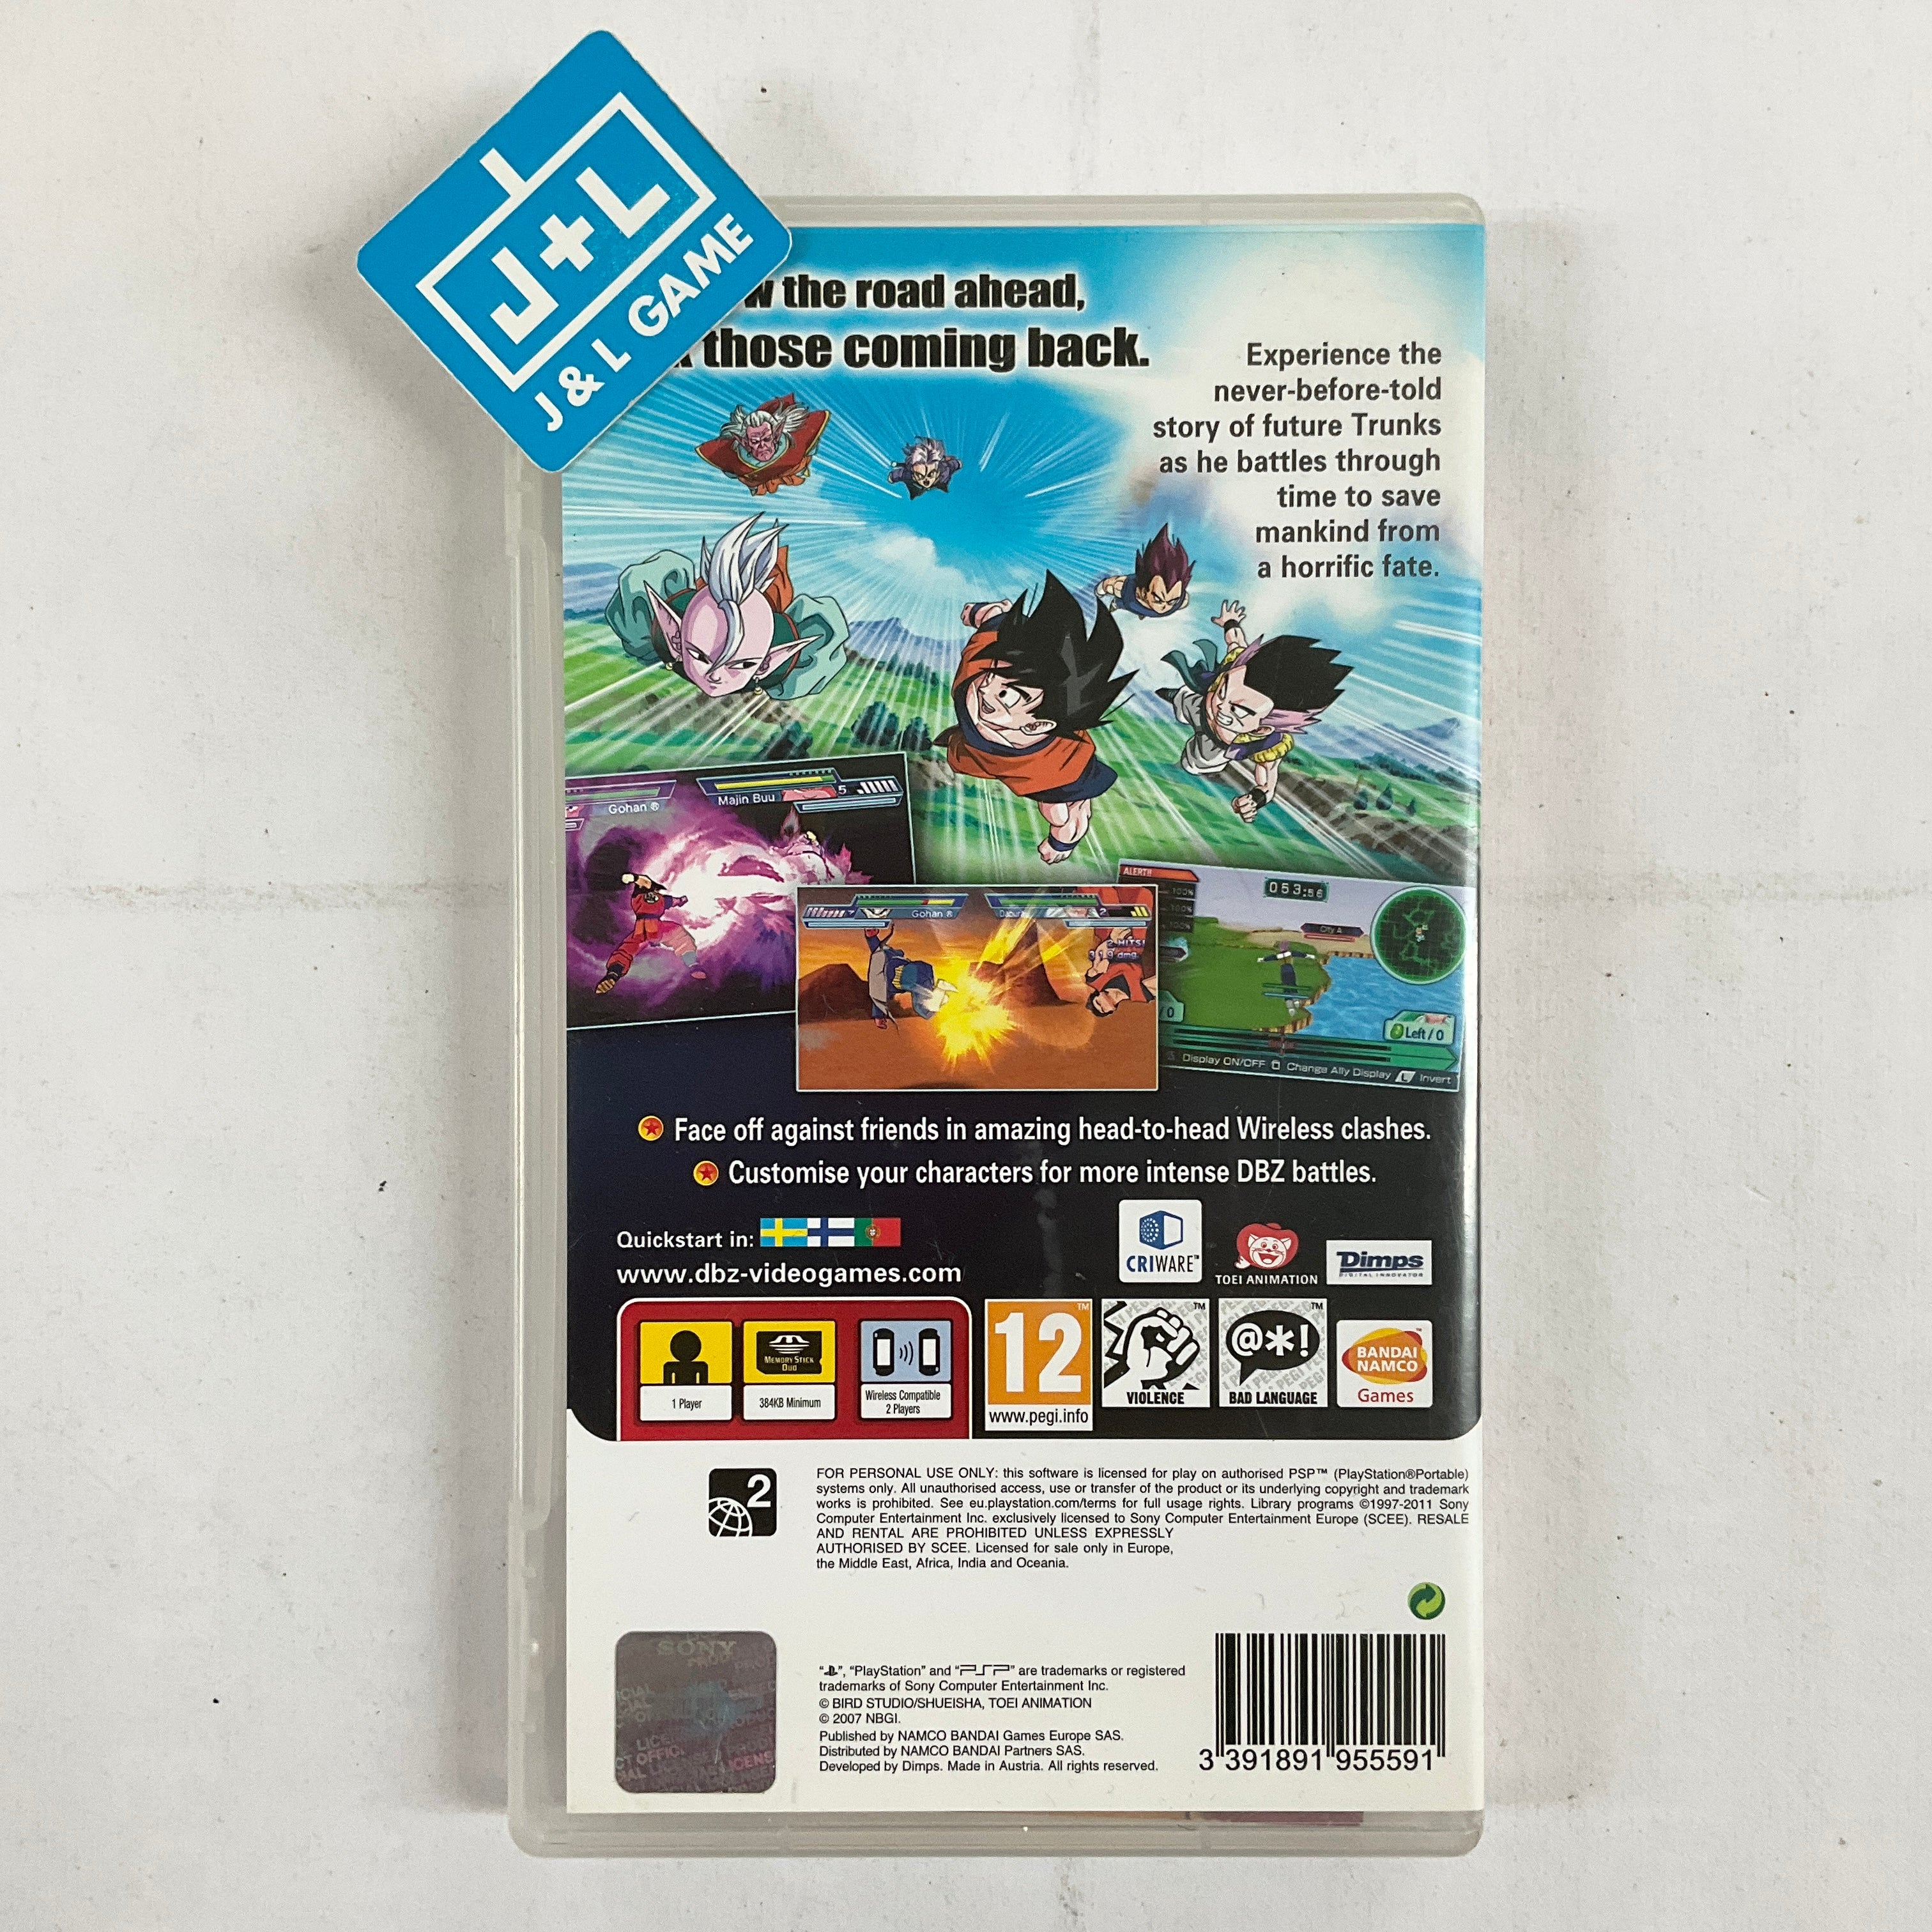 Dragon Ball Z: Shin Budokai 2 (PSP Essentials)- Sony PSP [Pre-Owned] (European Import) Video Games Atari   